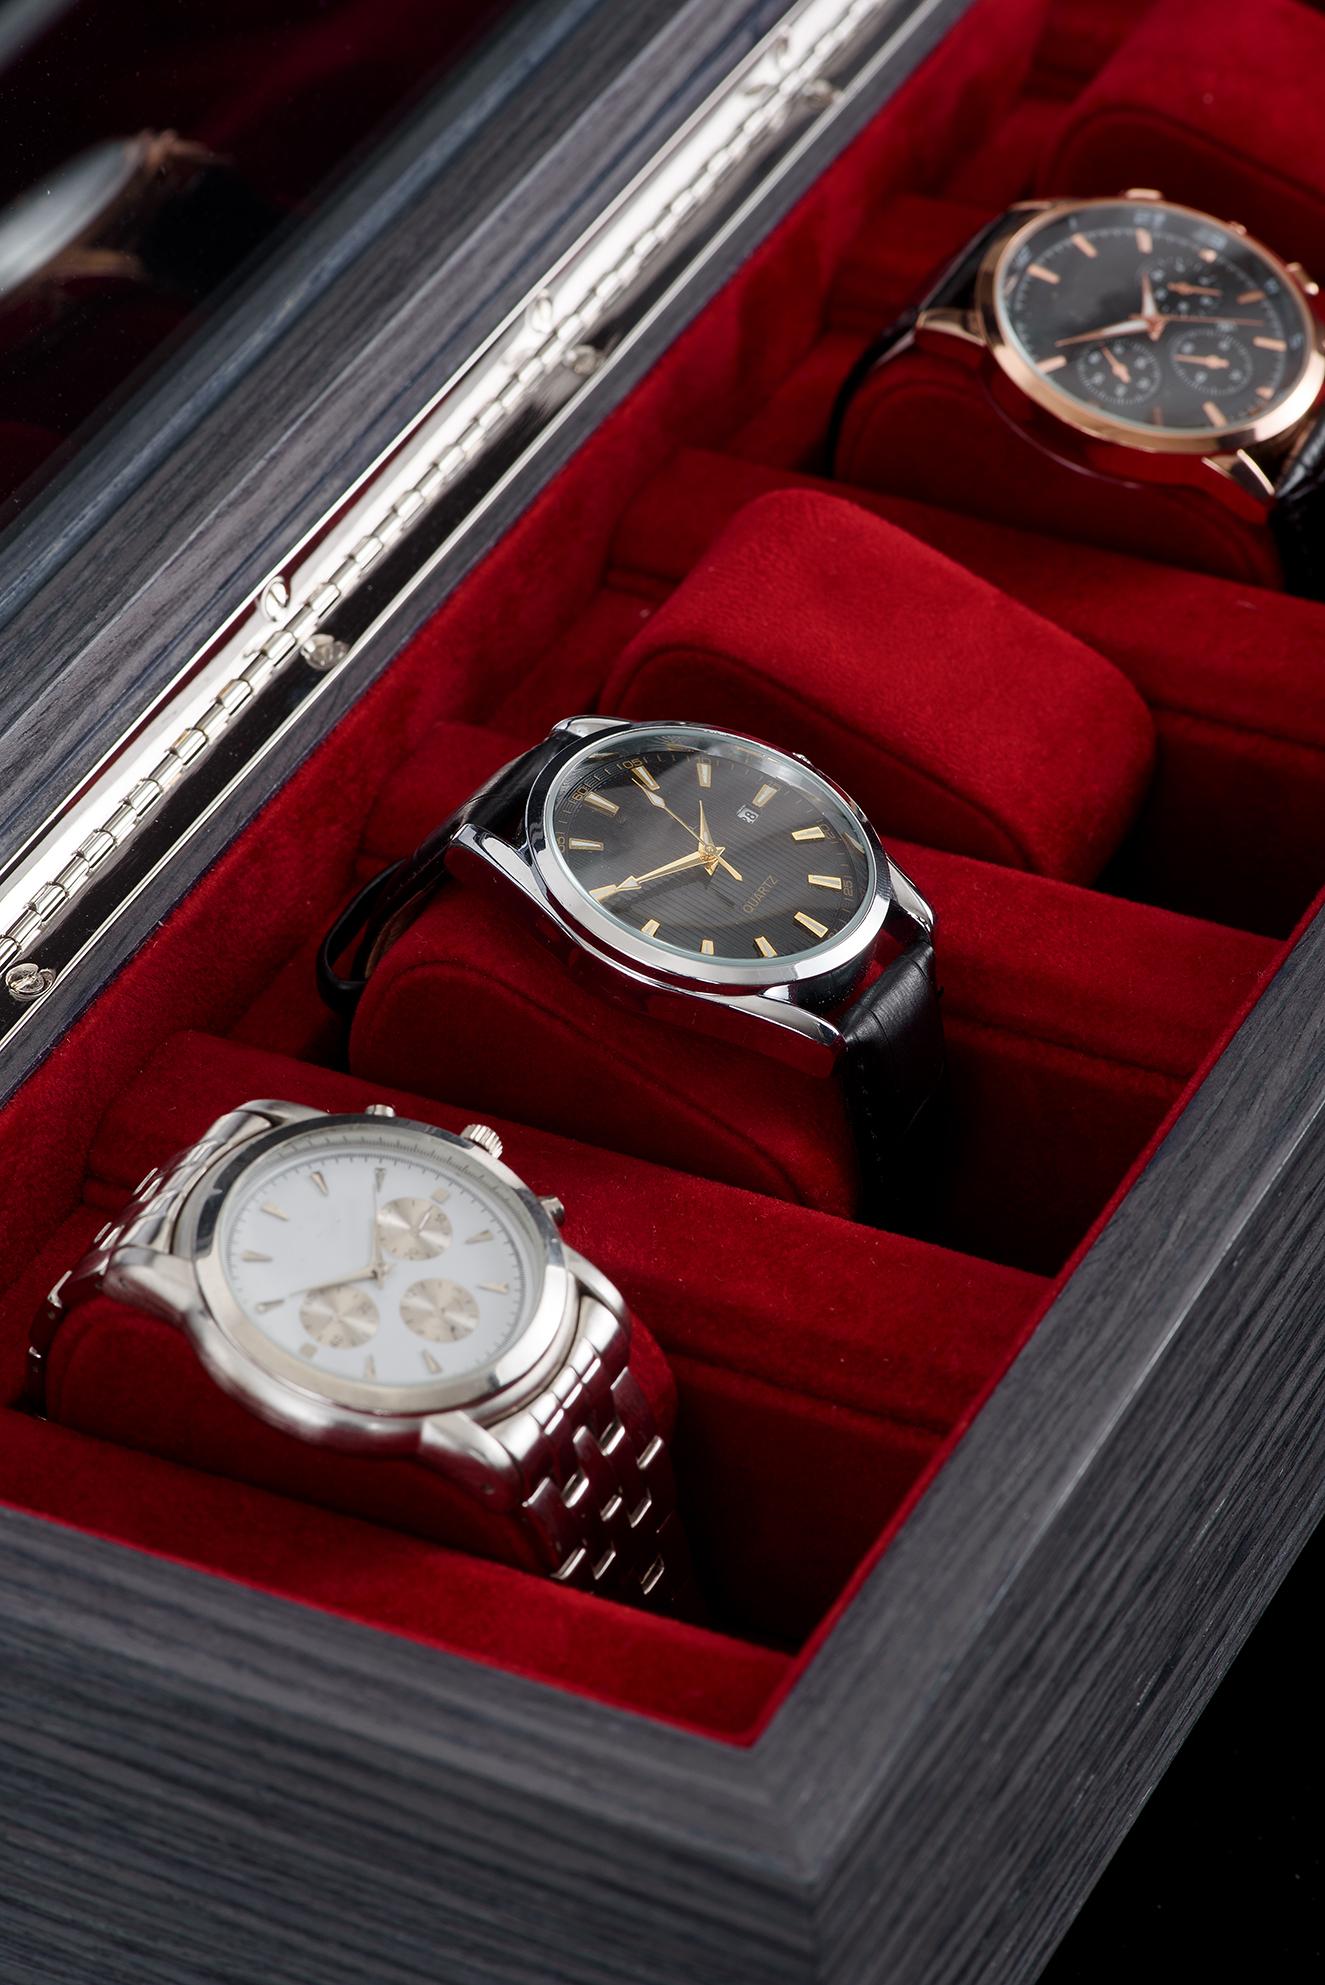 Watch Box for Five Watches in Smoke Grey Oak, Red Ultrasuede Detail by Agresti For Sale 2